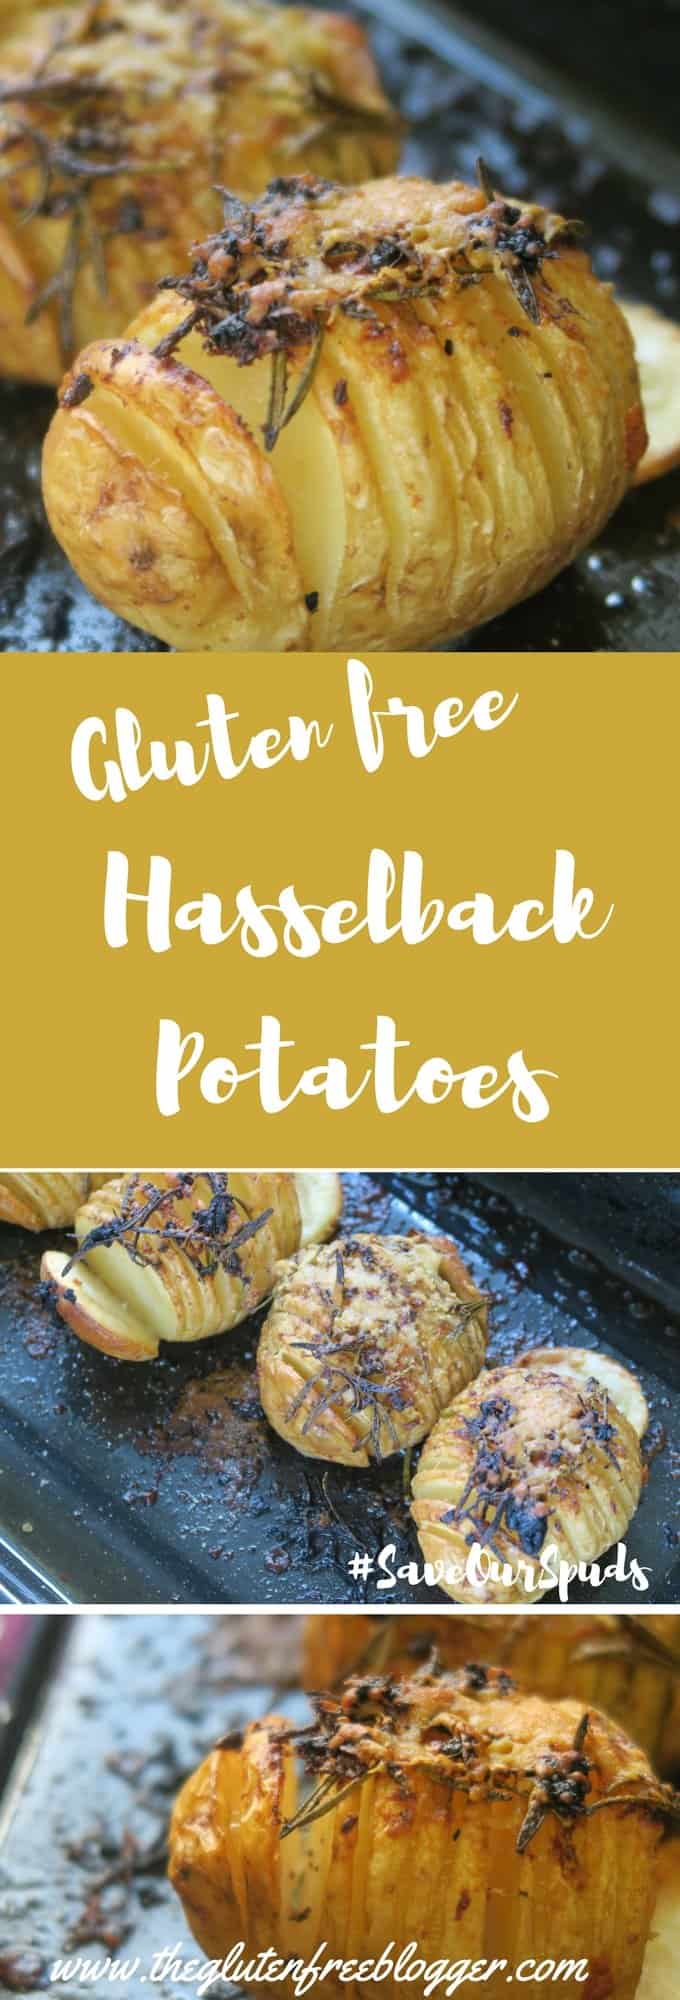 Gluten free hasselback potatoes recipe Love Food Hate Waste - www.theglutenfreeblogger.com